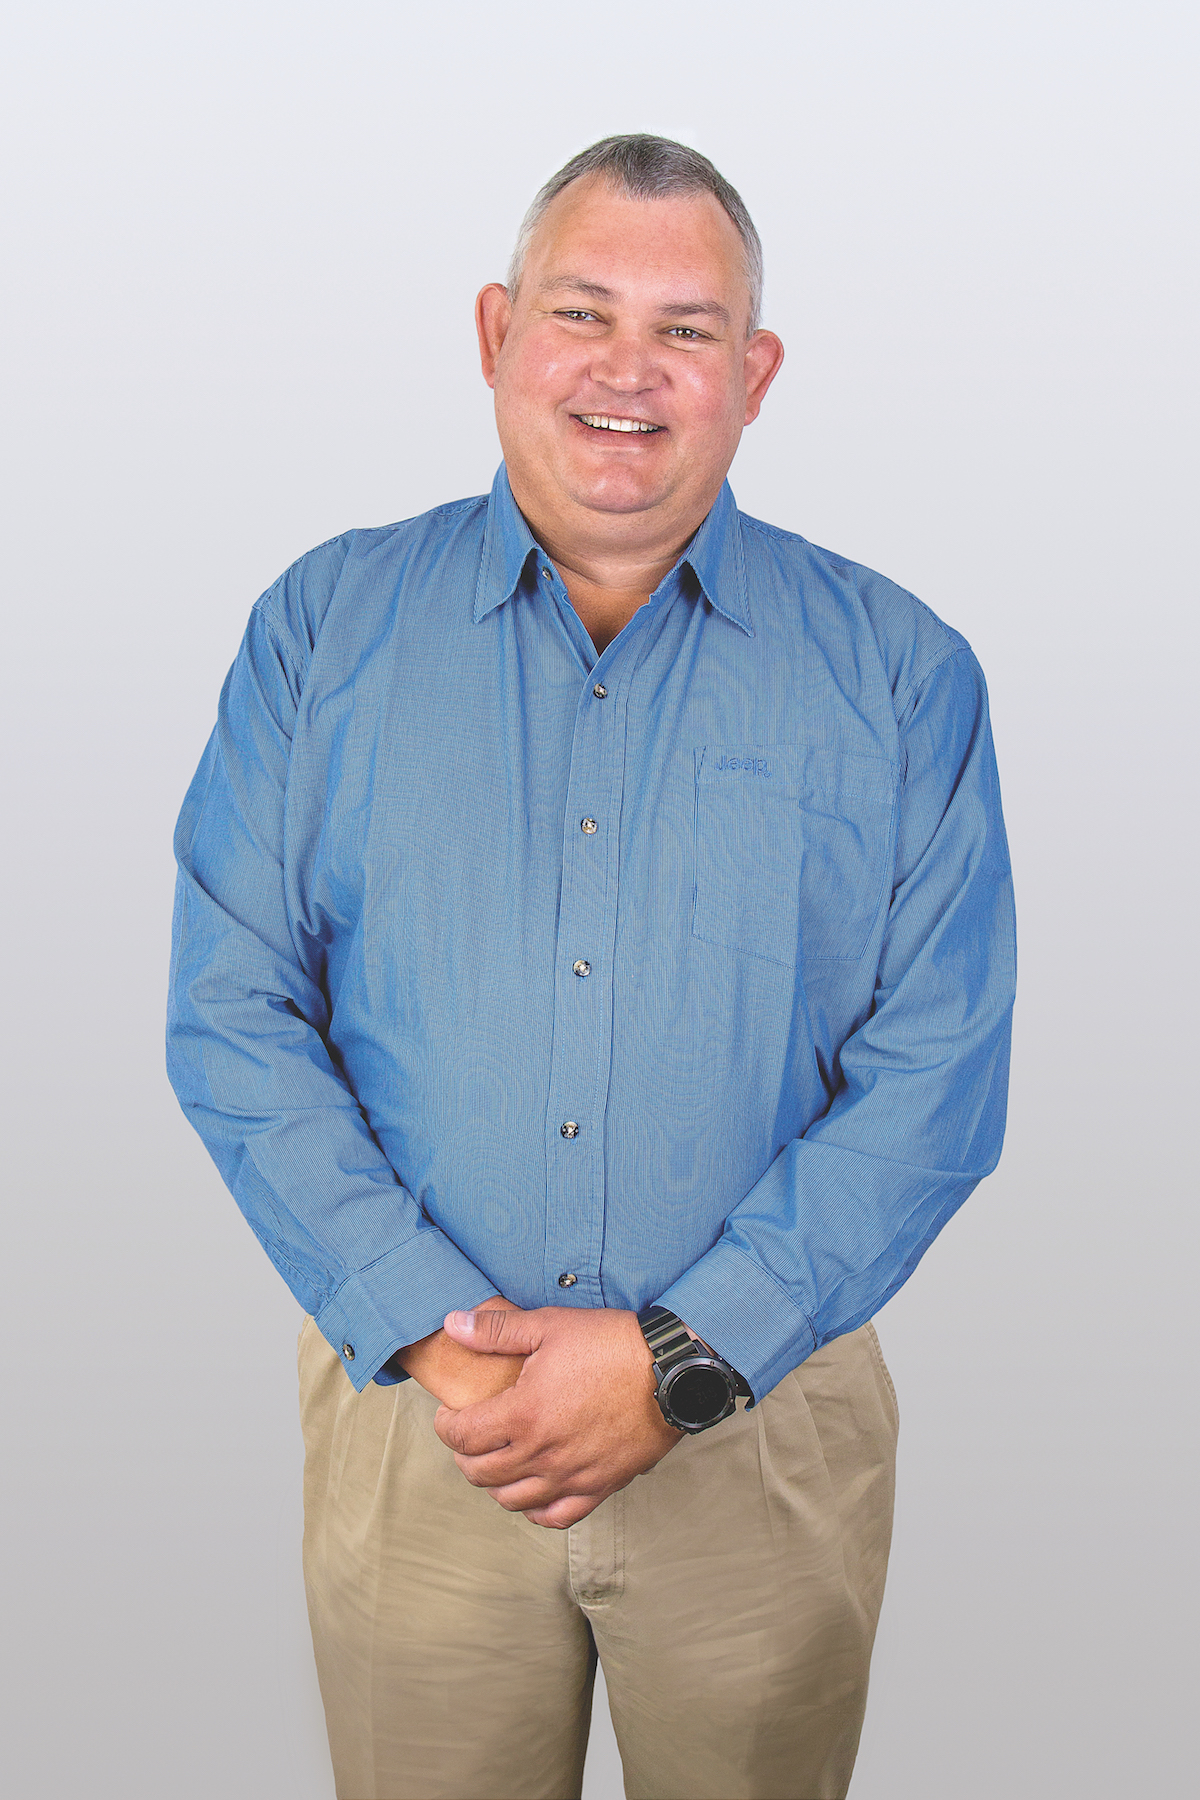 Ian Collard CEO of Namib Mills